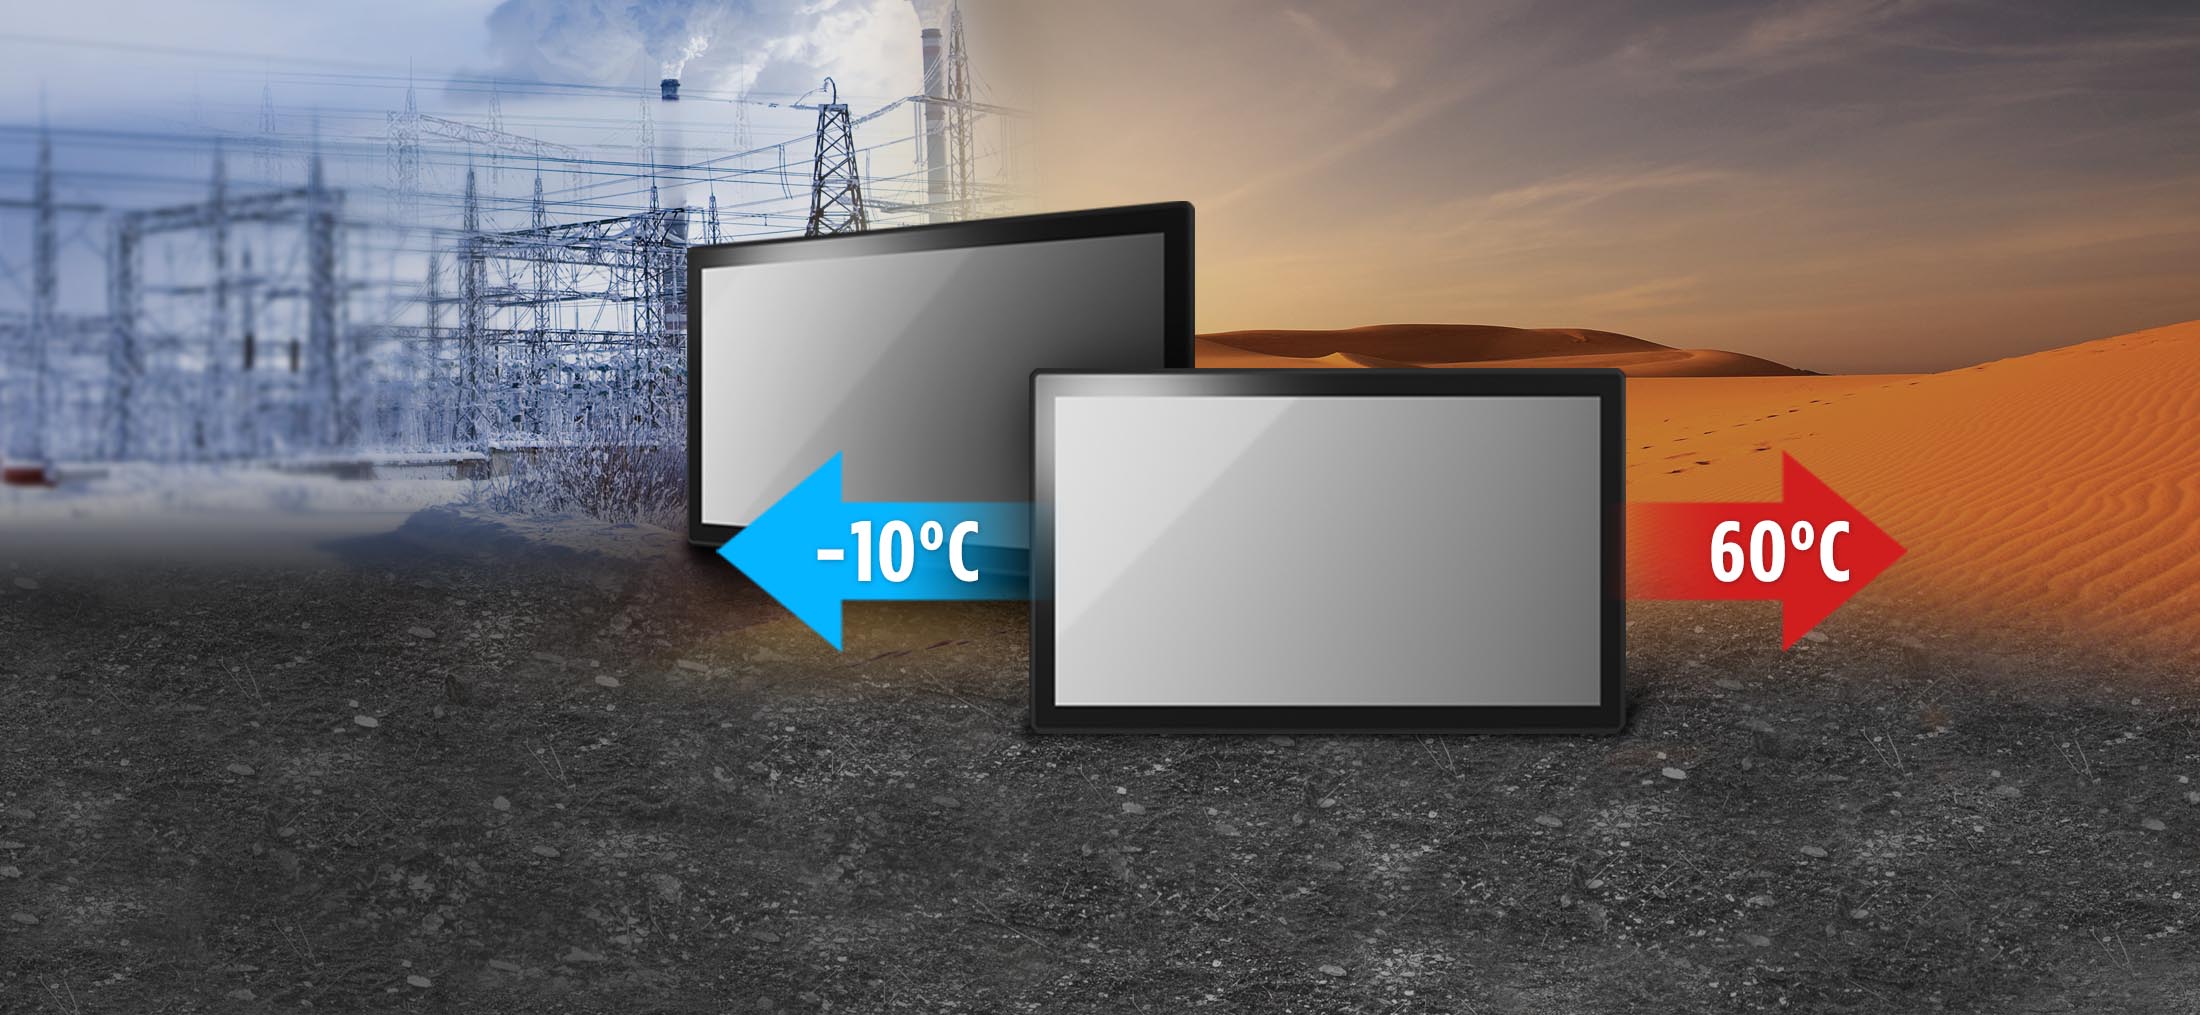 industrial-panel-PC-extreme-wide-temperature-range